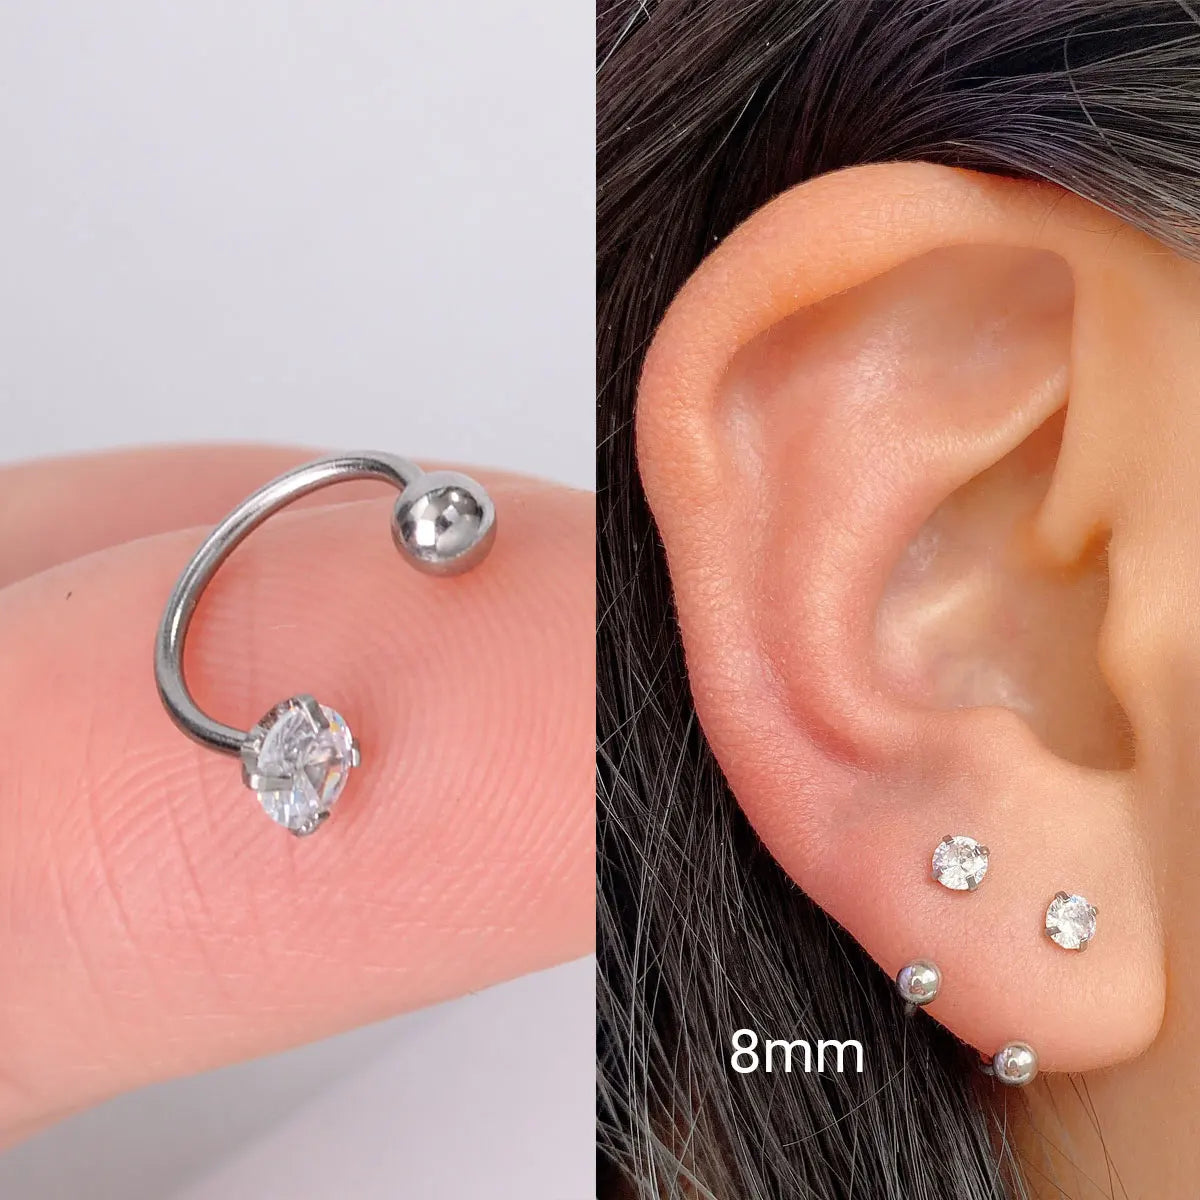 piercing for earrings